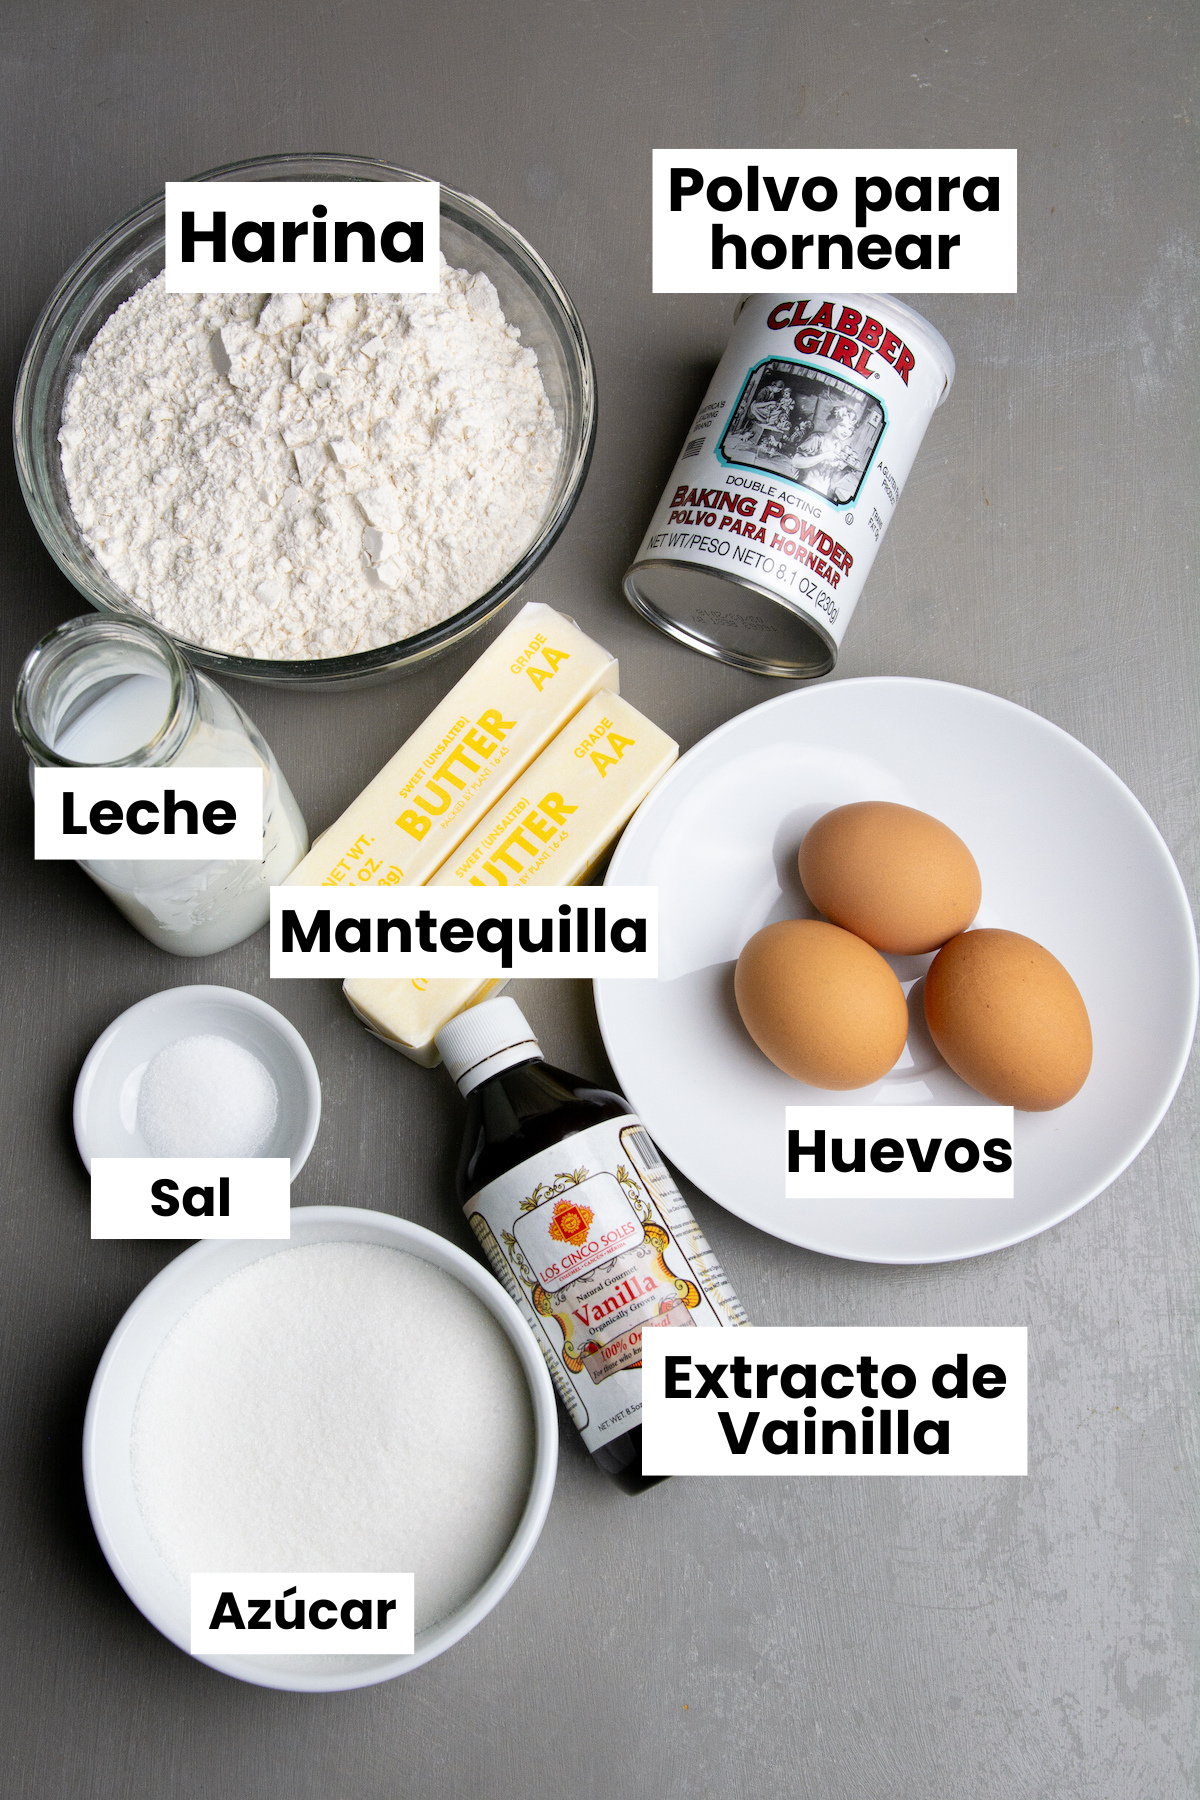 Ingredients for making pound cake, flour, baking powder, milk, butter, salt, huevos, sugar, vanilla extract labeled in Spanish.